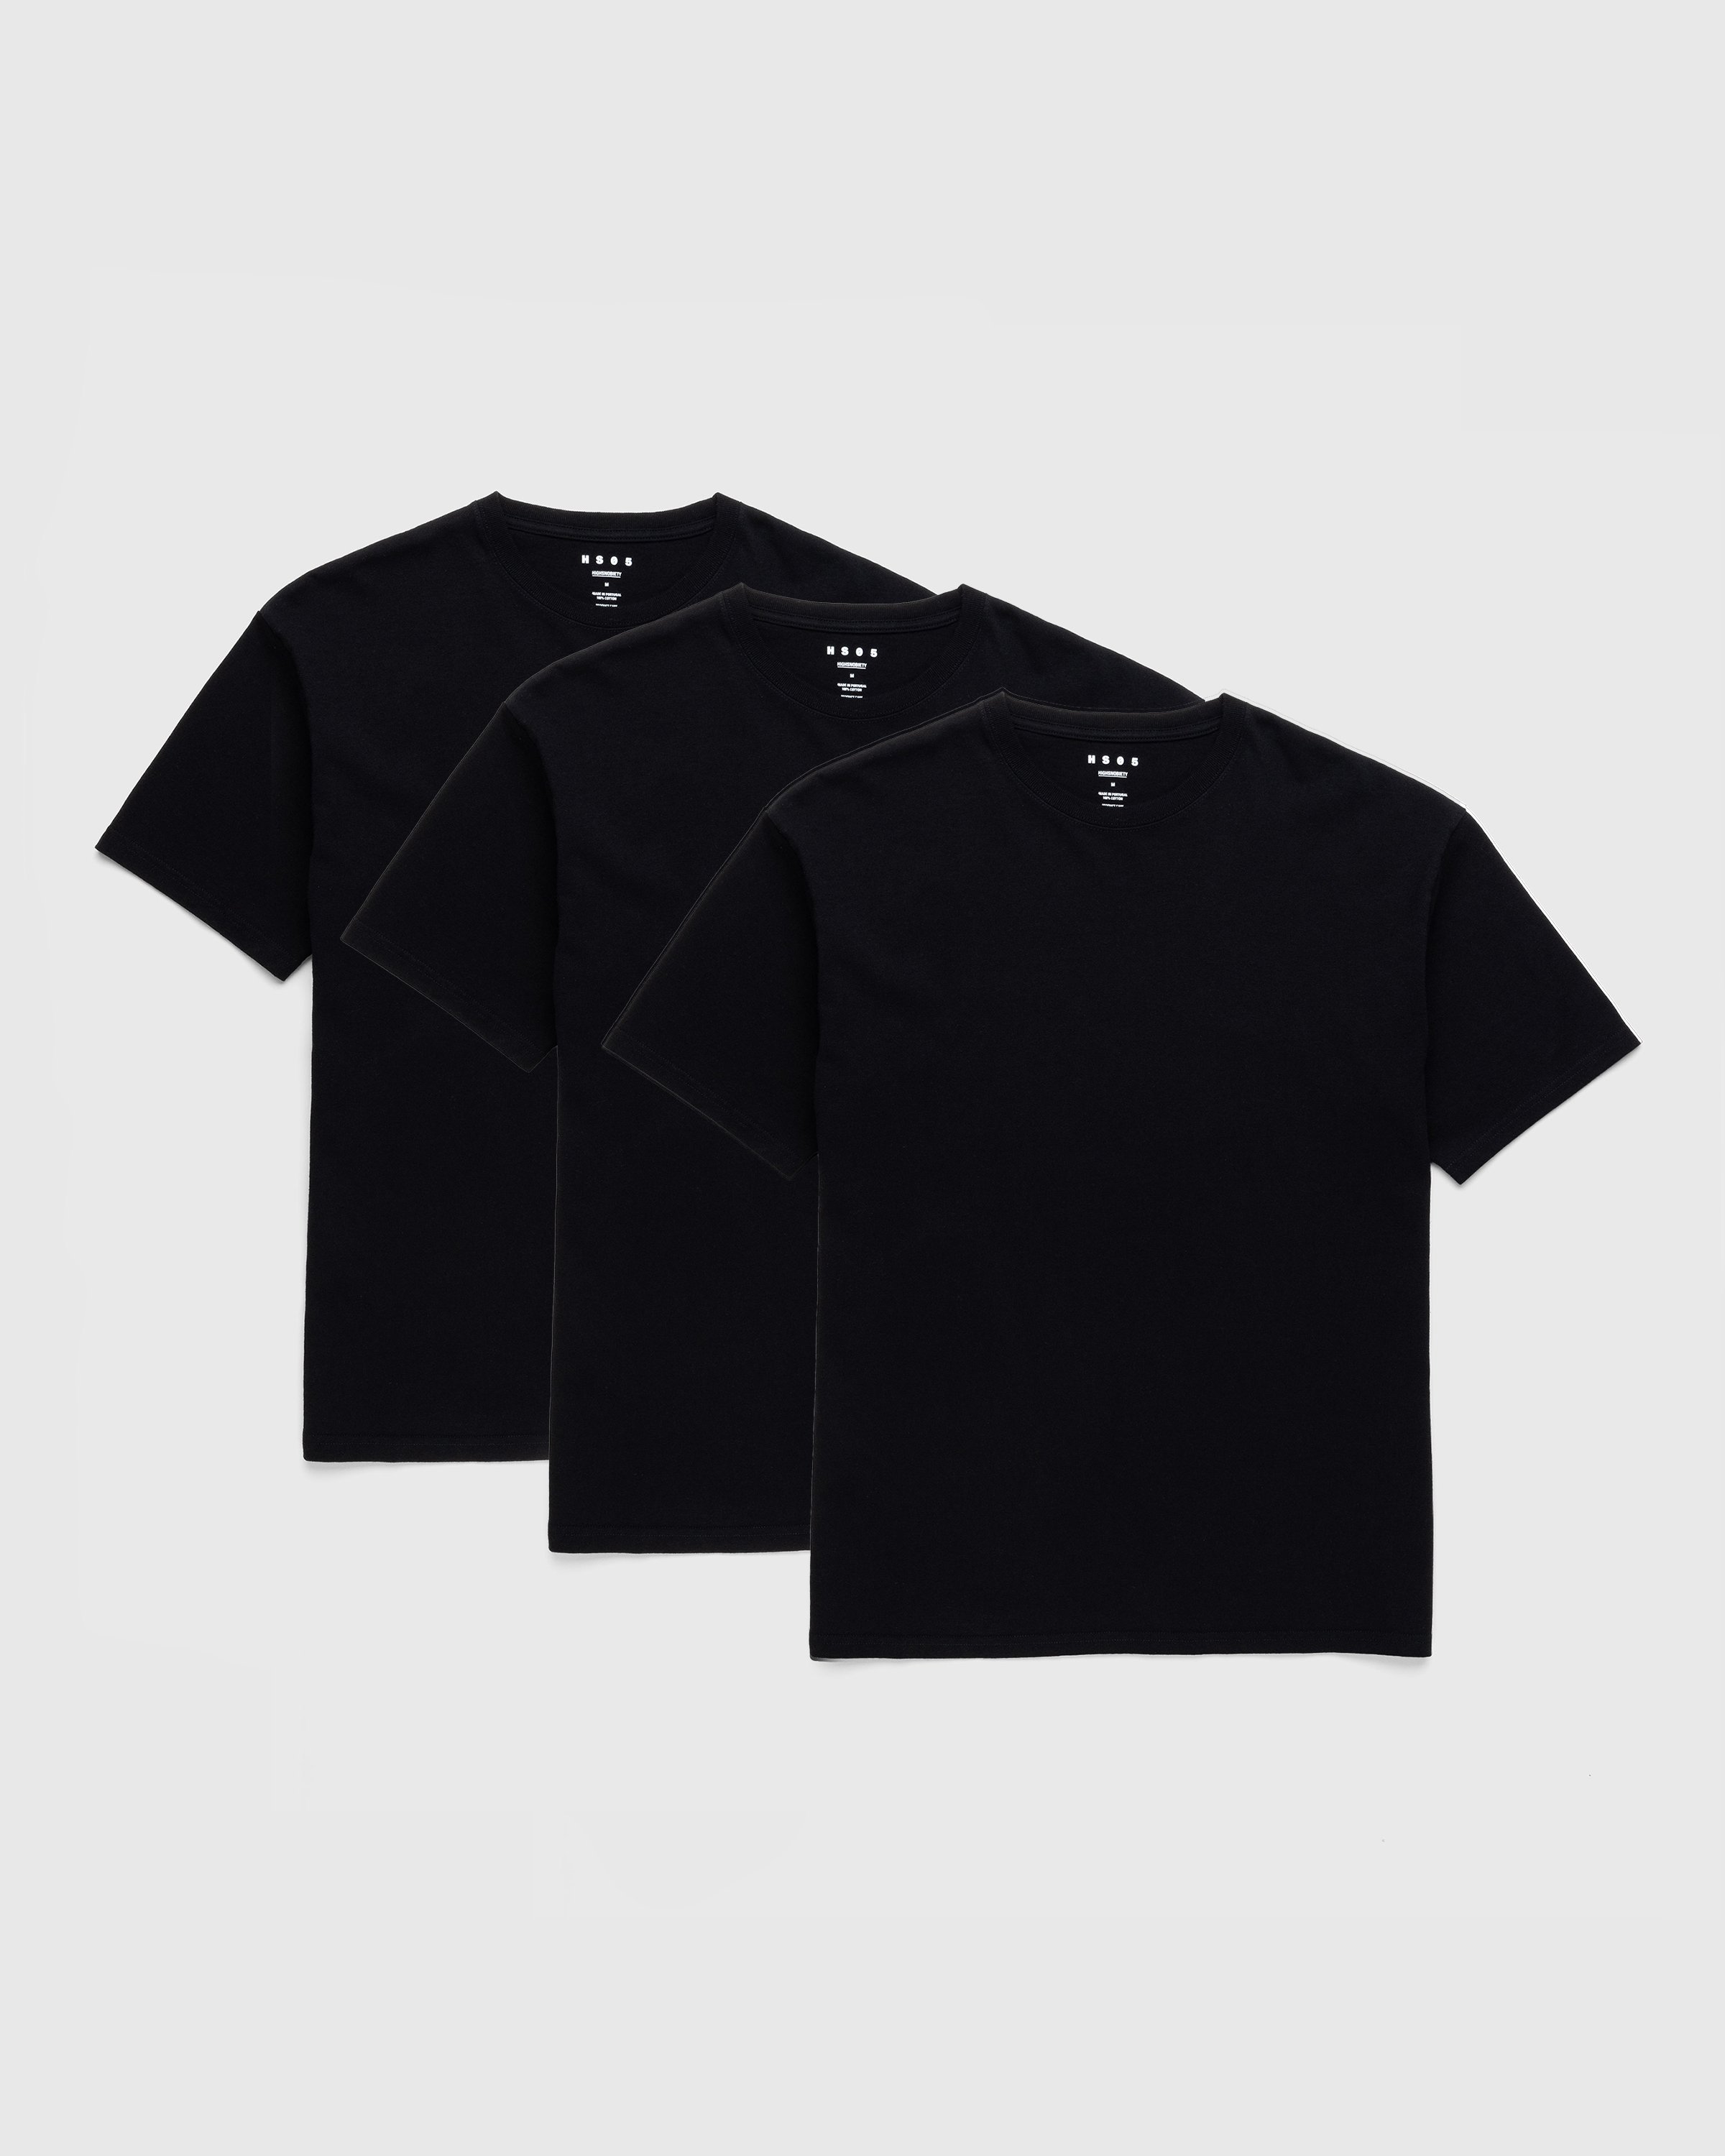 Highsnobiety HS05 - 3 Pack T-Shirts Black - Clothing - Black - Image 1